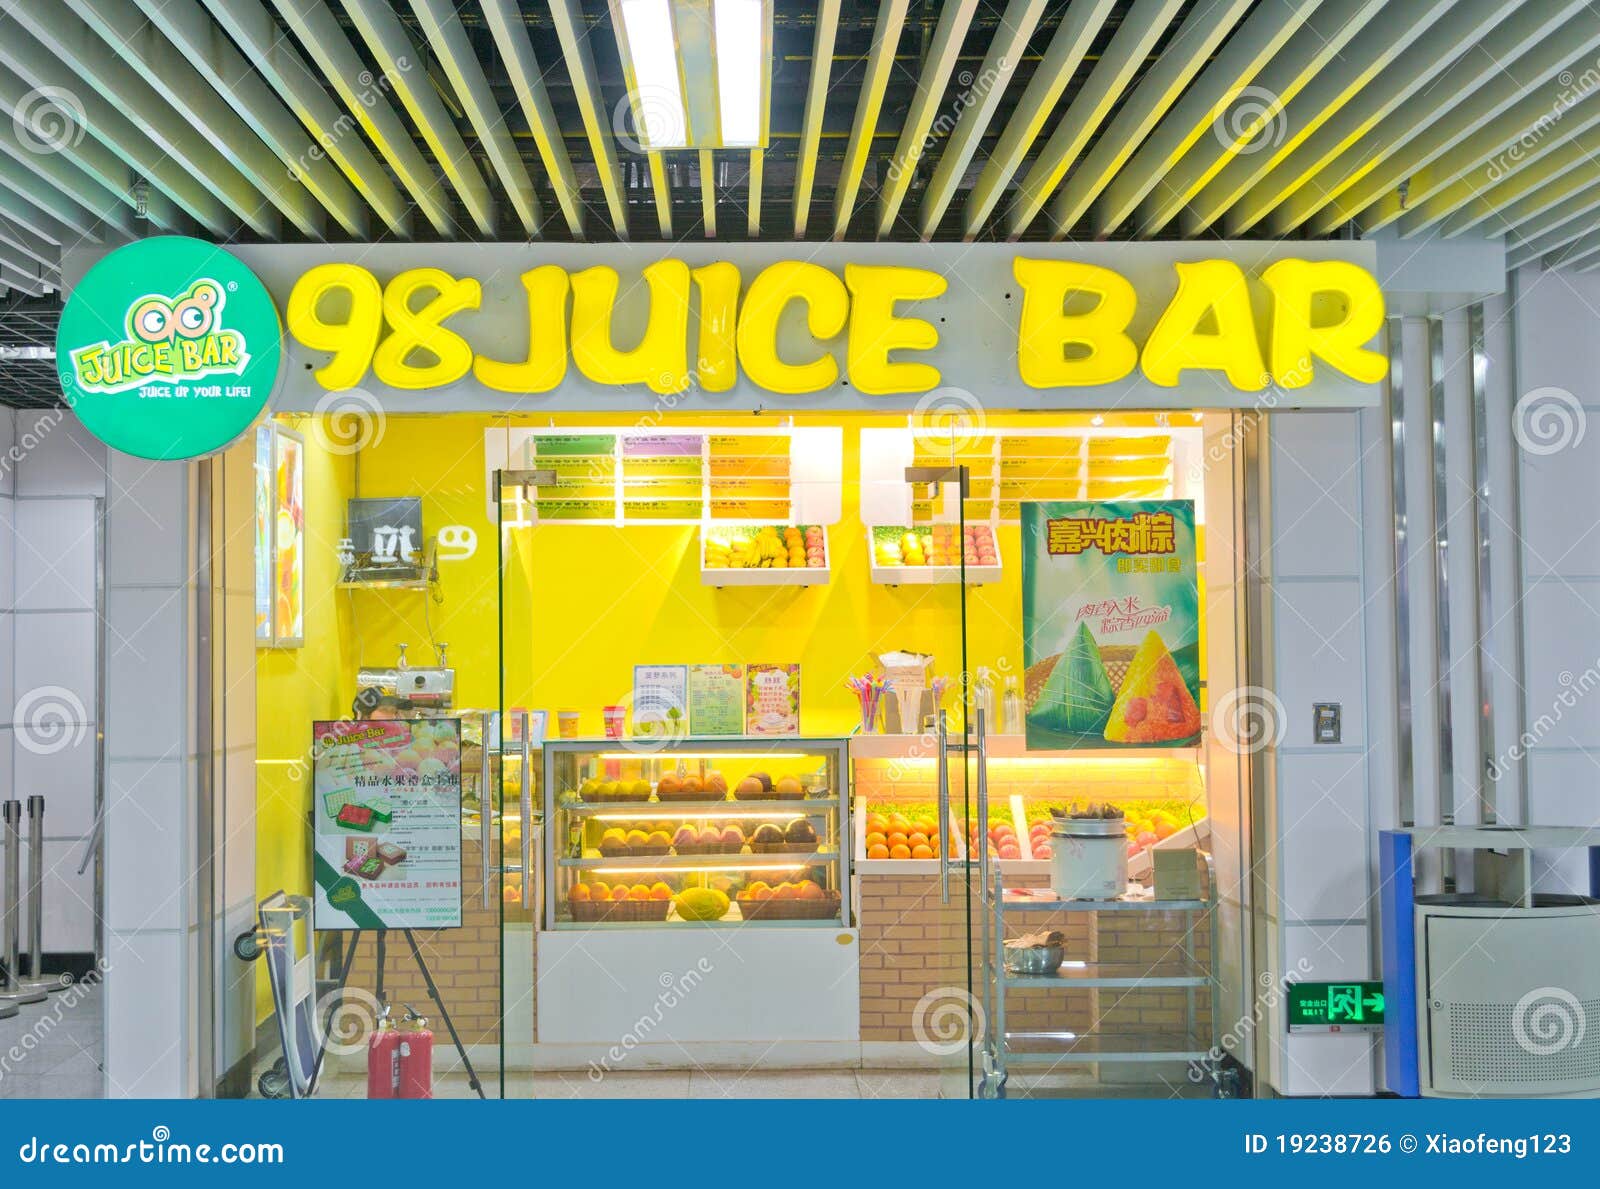 juice bar clipart - photo #45